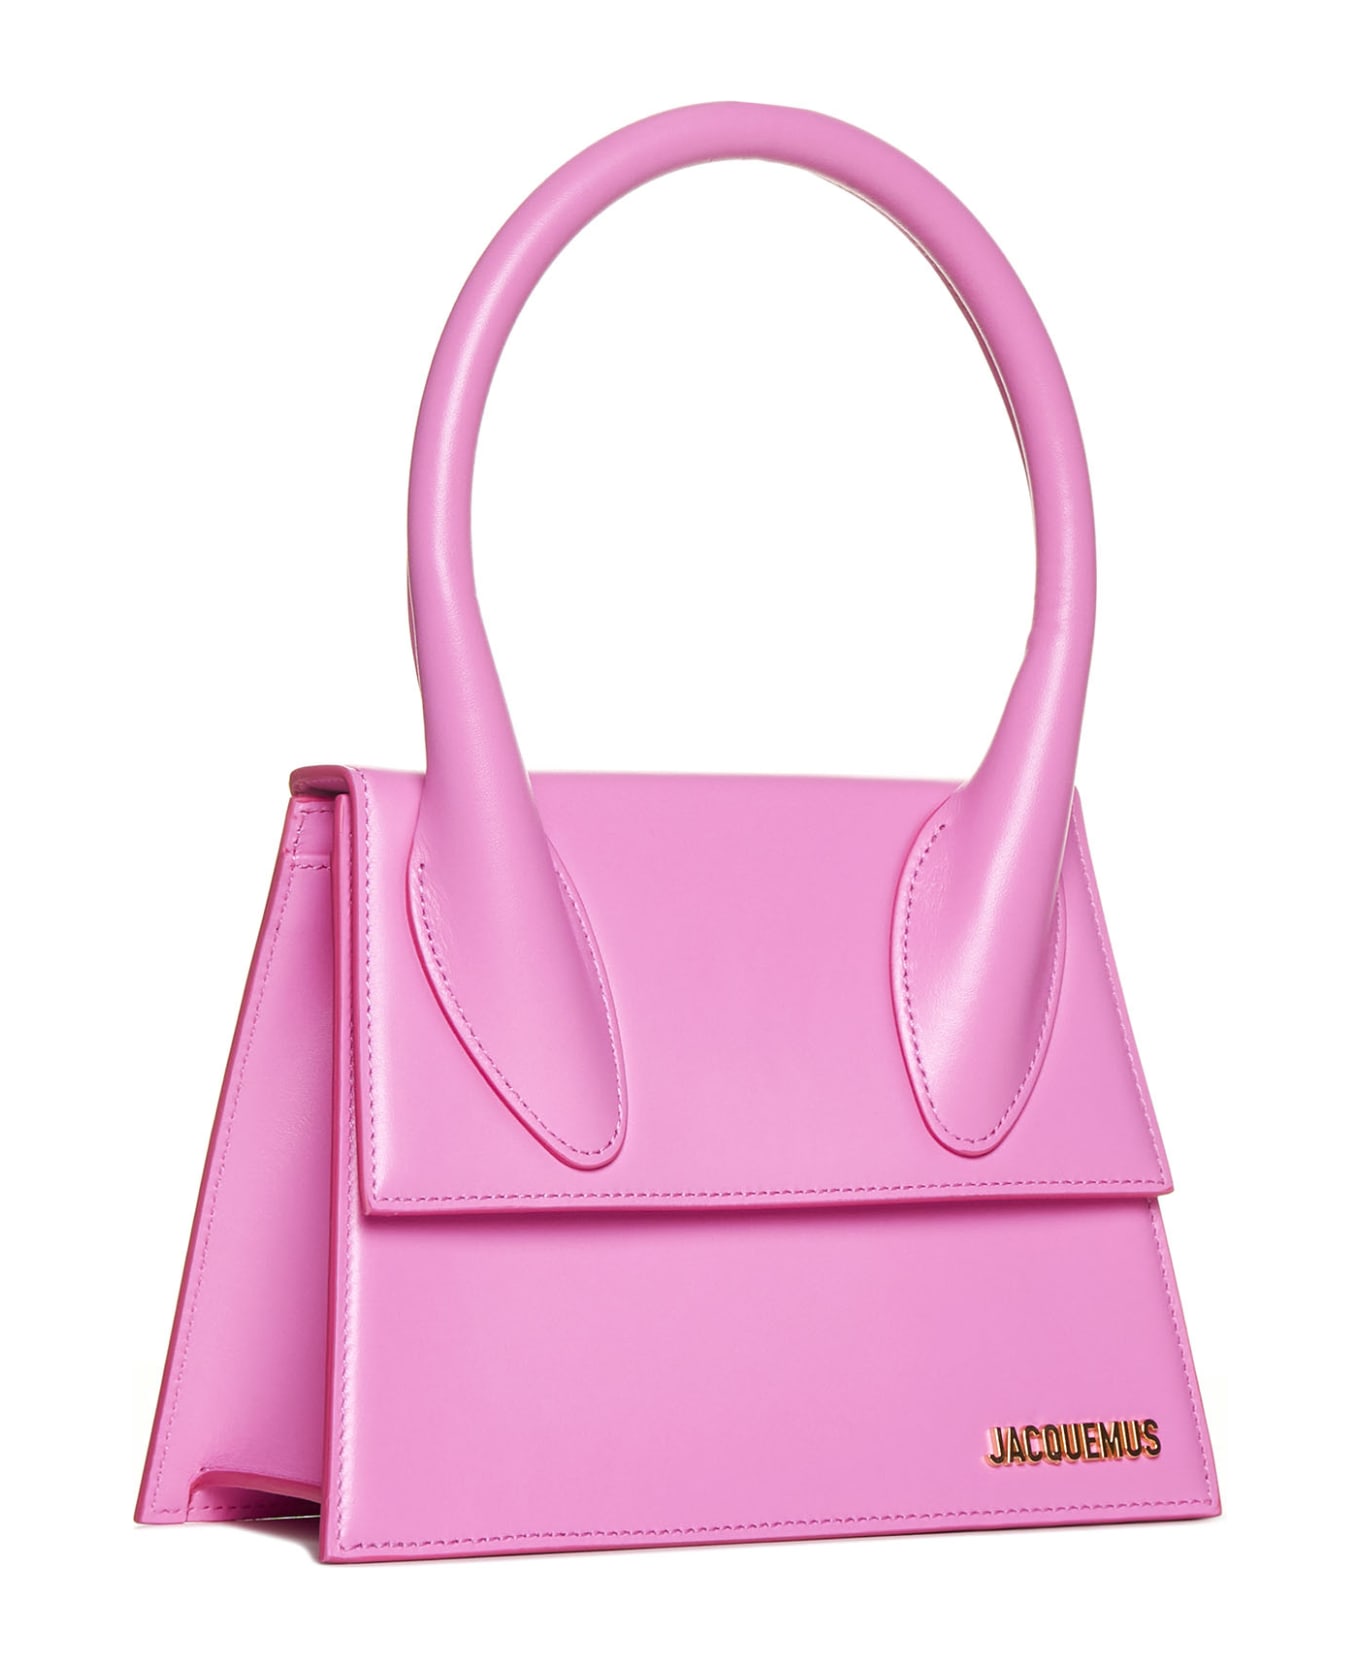 Jacquemus Le Grand Chiquito Shoulder Bag - Neon pink